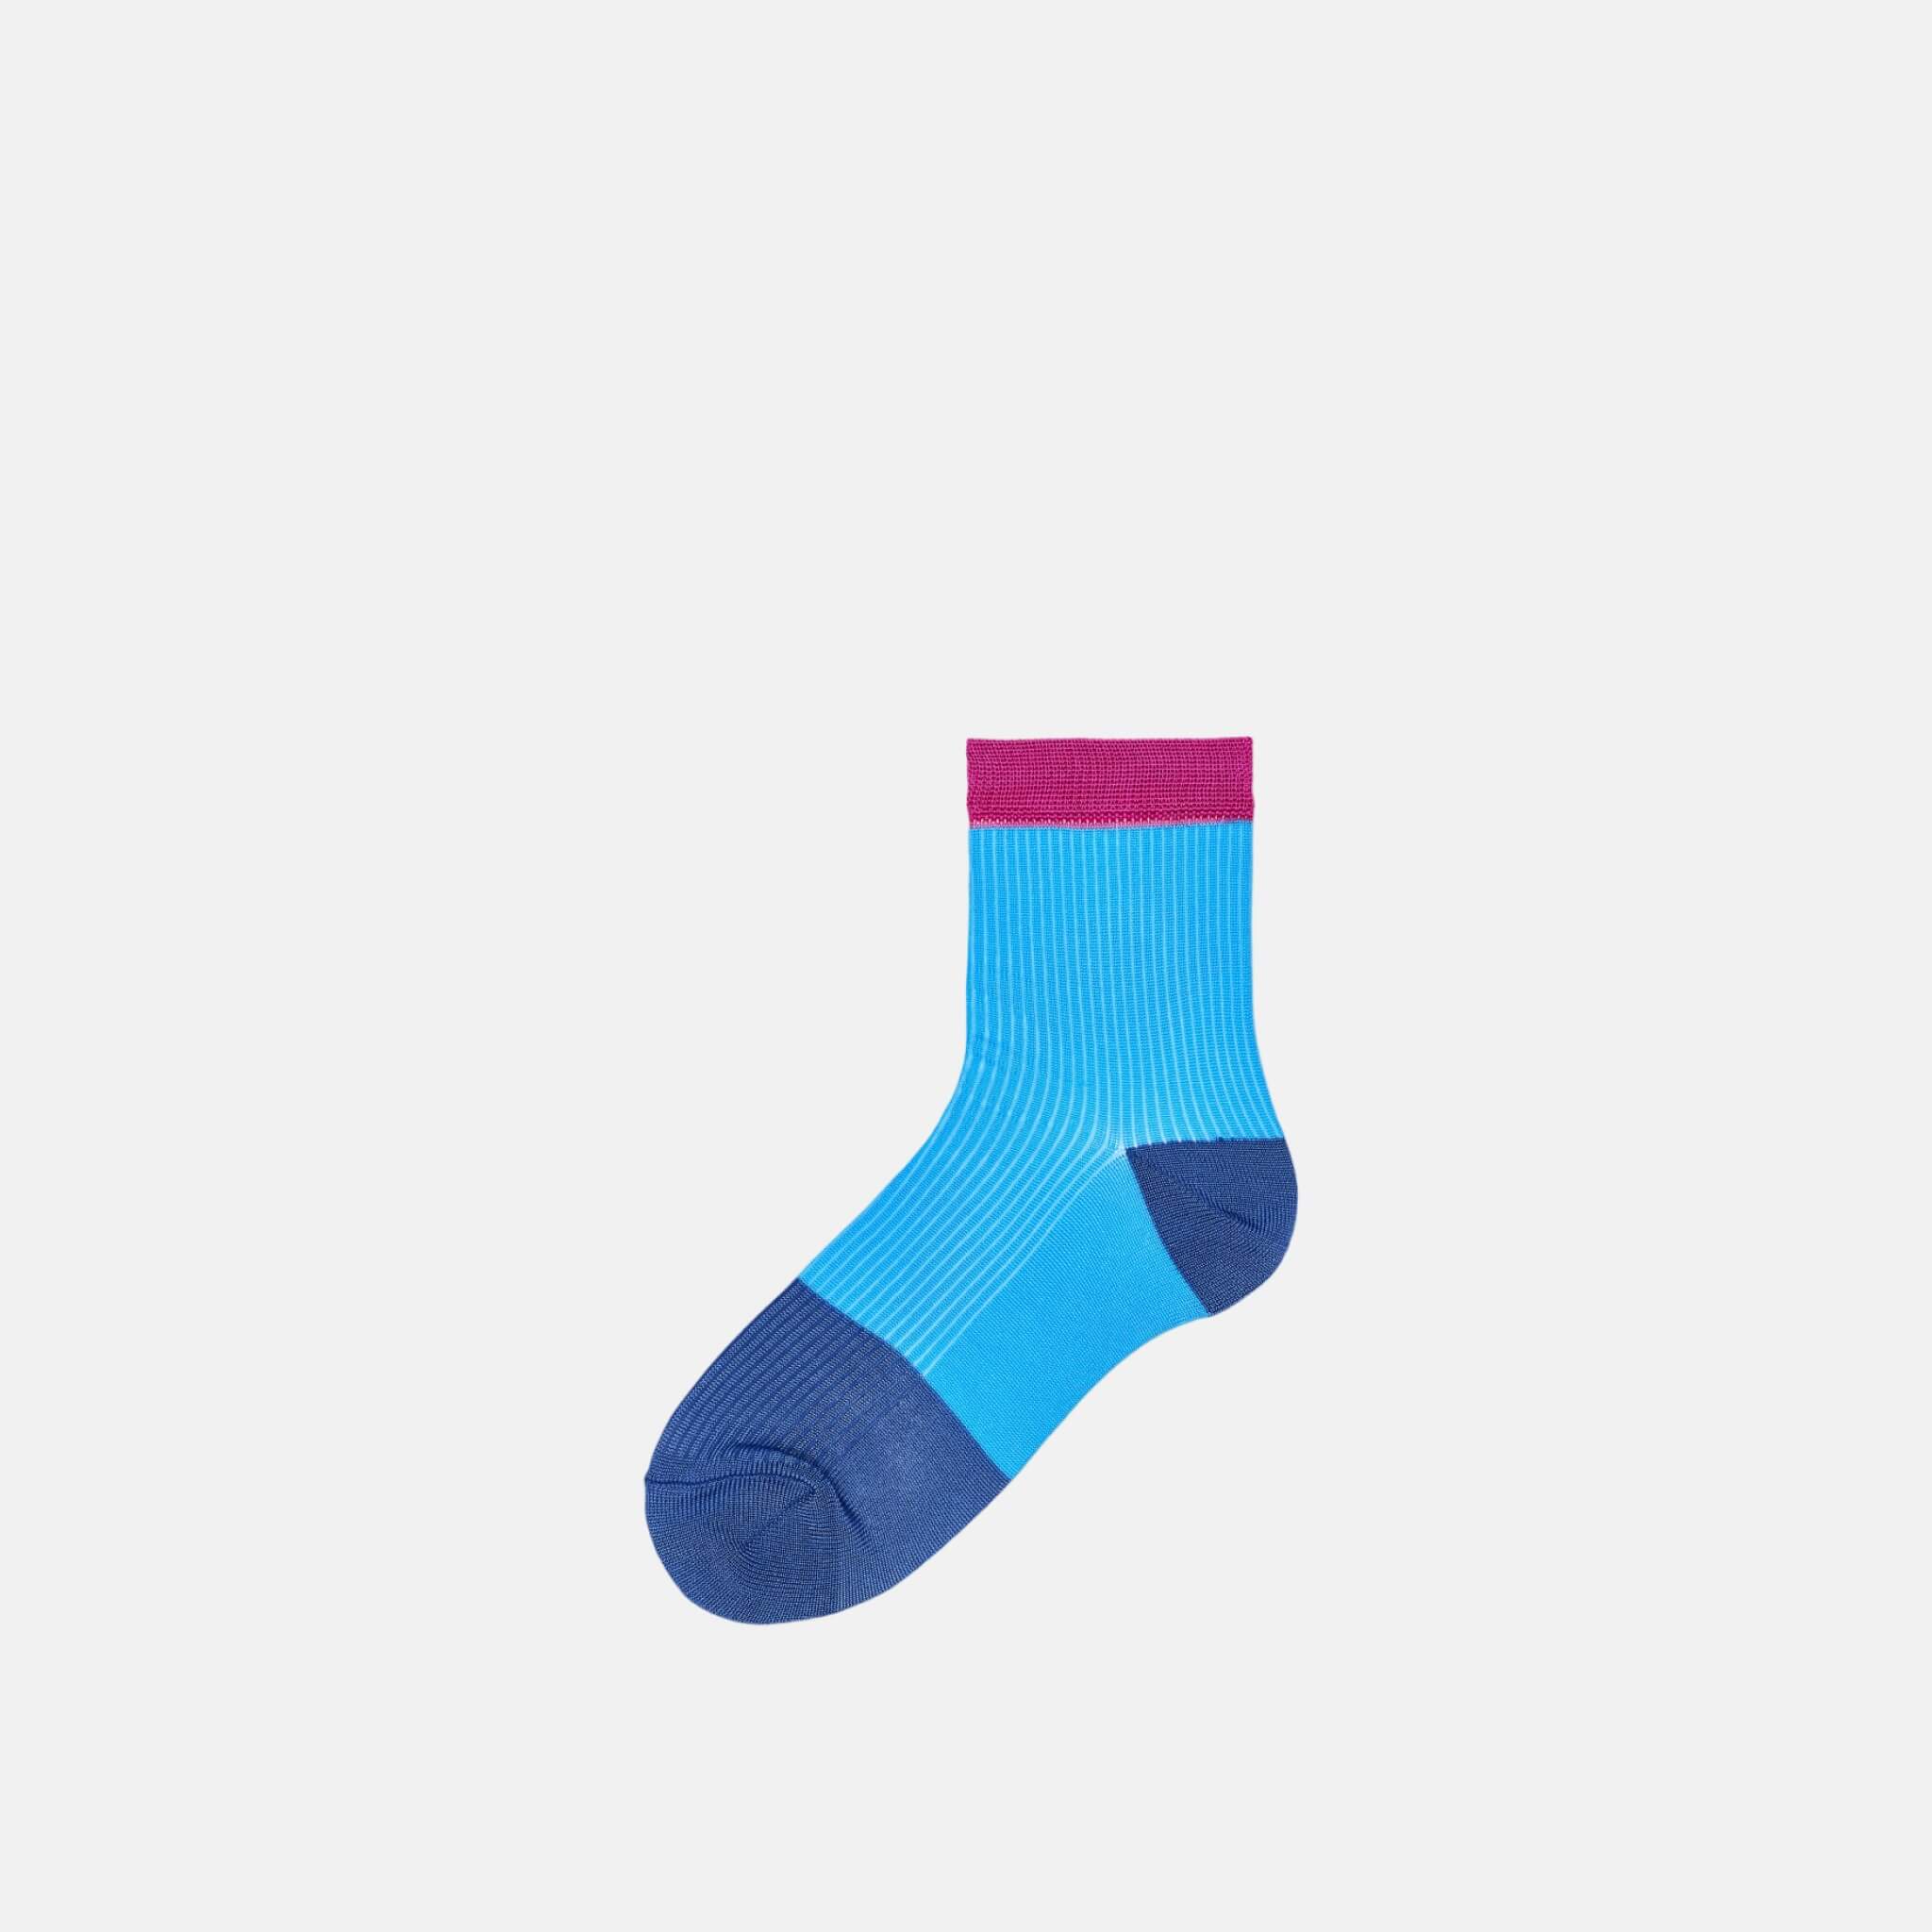 Dámske modré ponožky Happy Socks Janna // kolekcia Hysteria